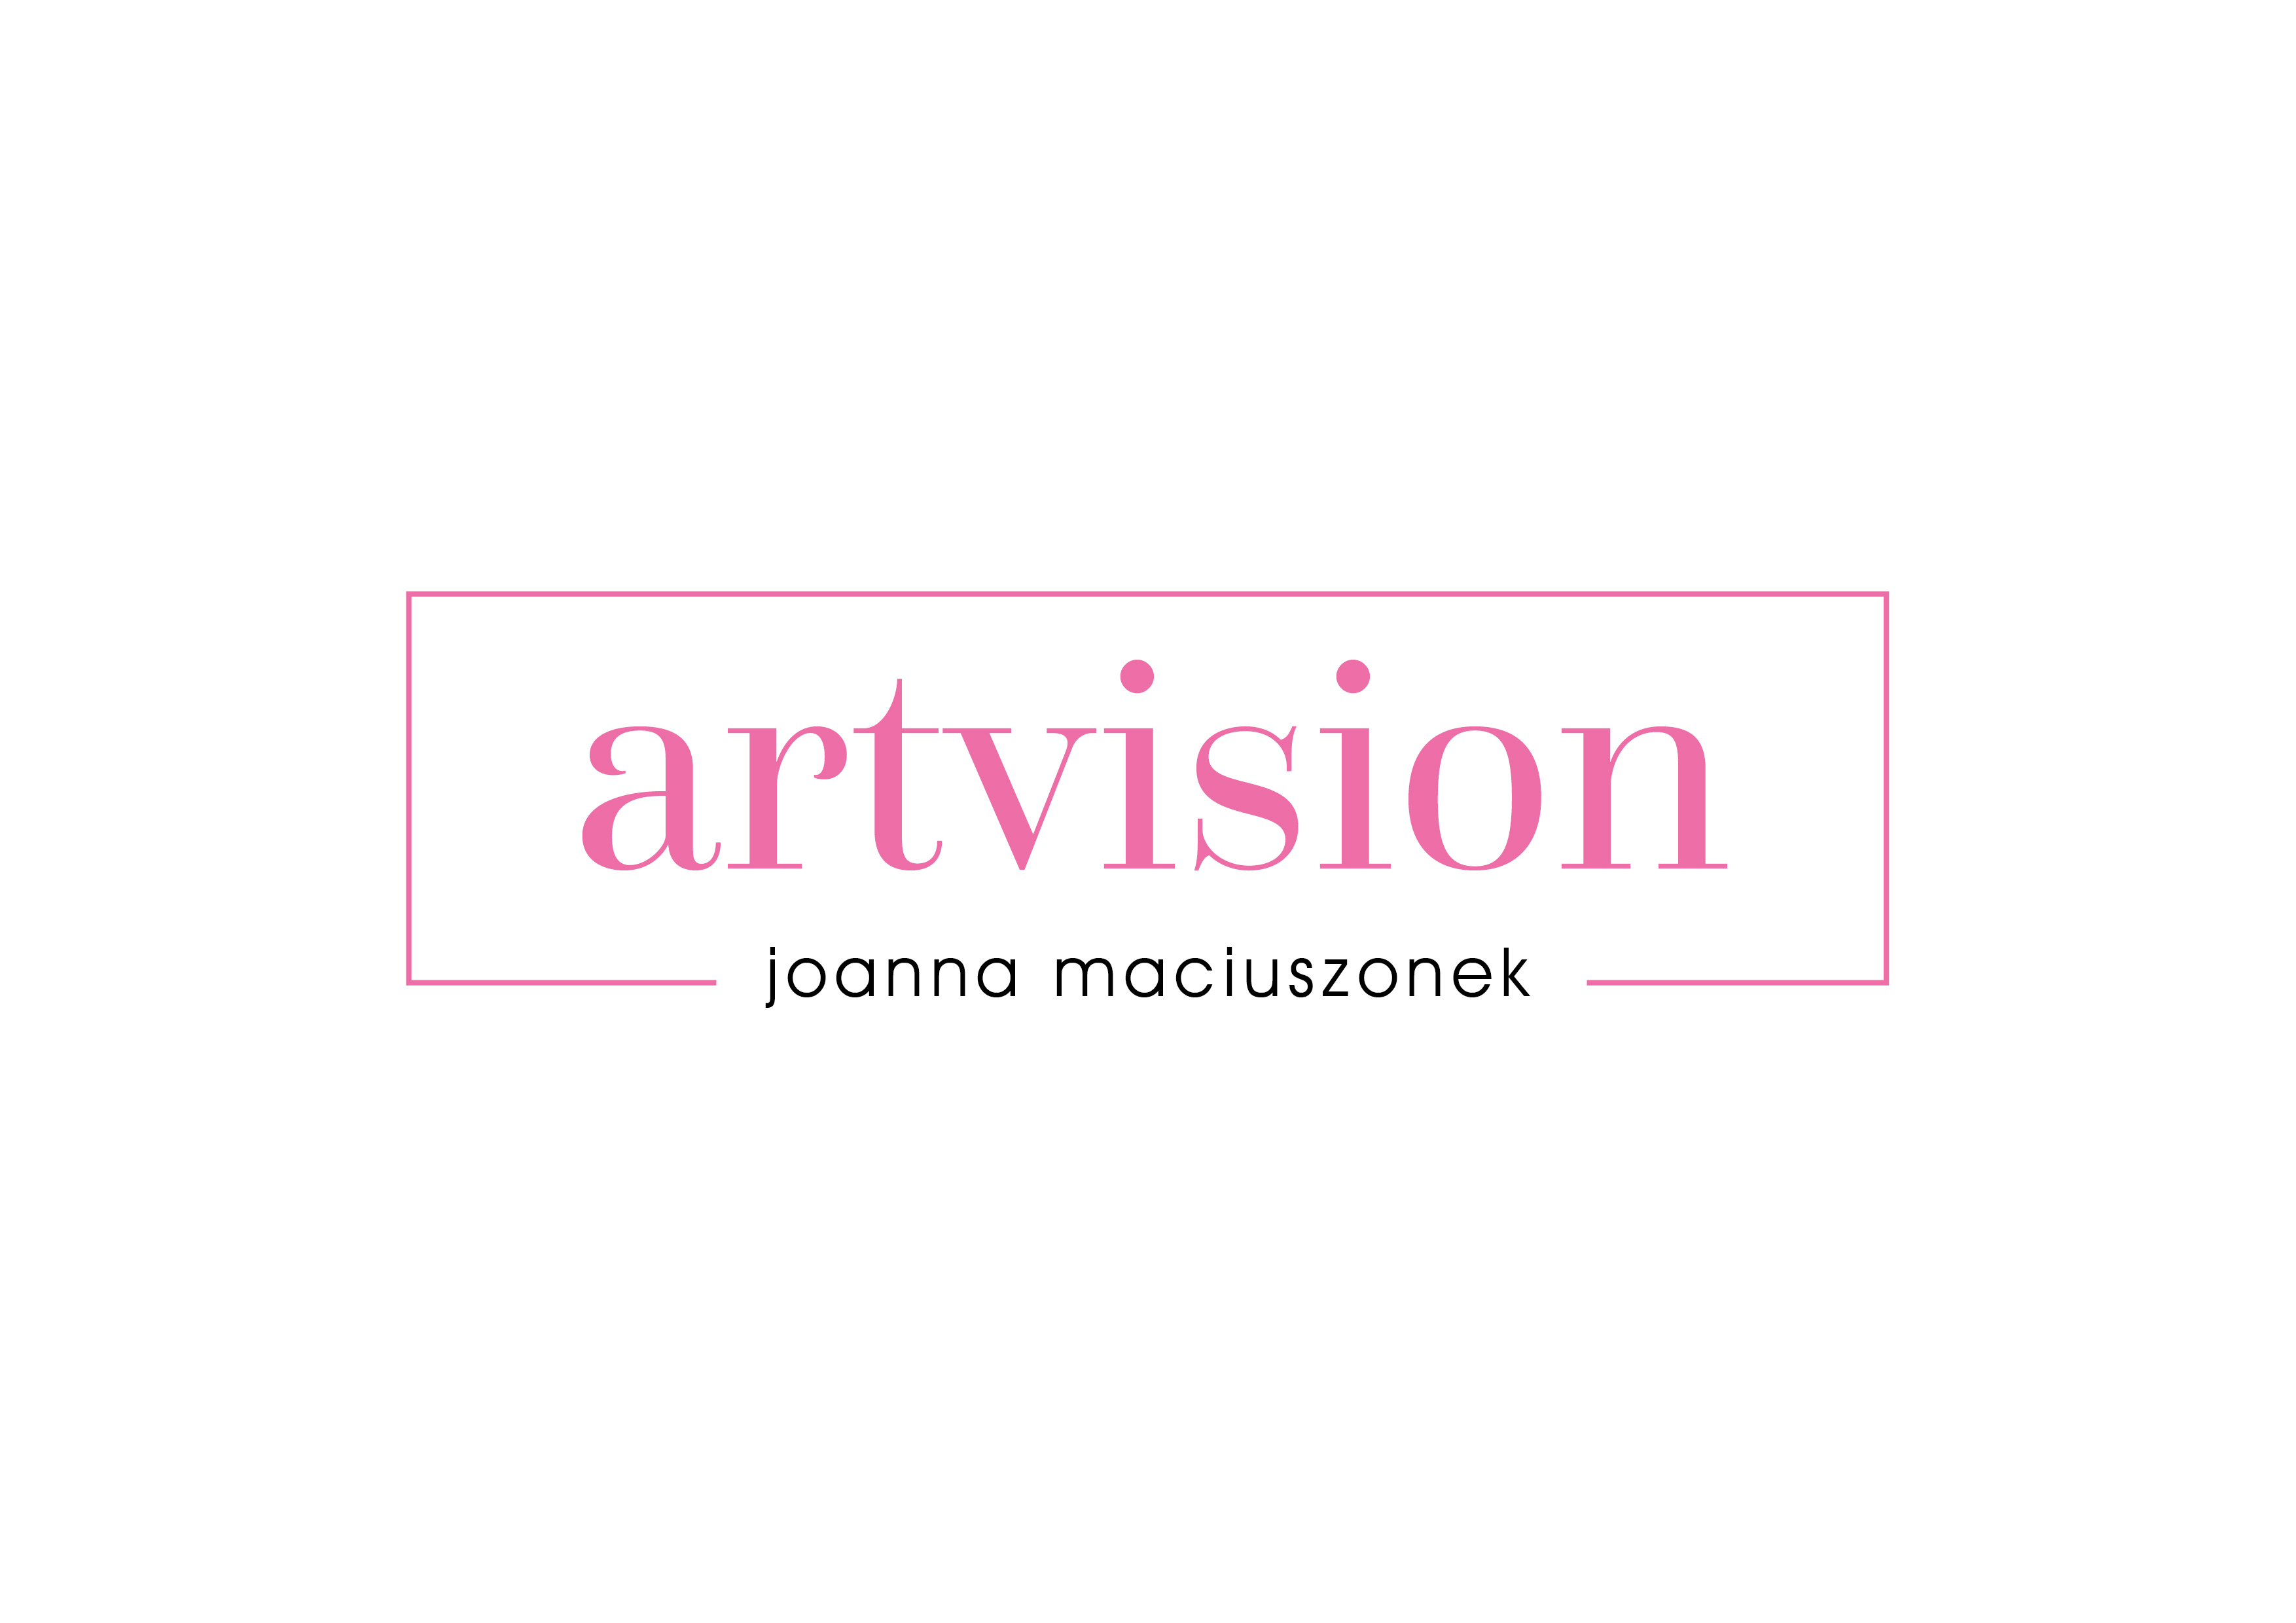 Artvision Joanna Maciuszonek